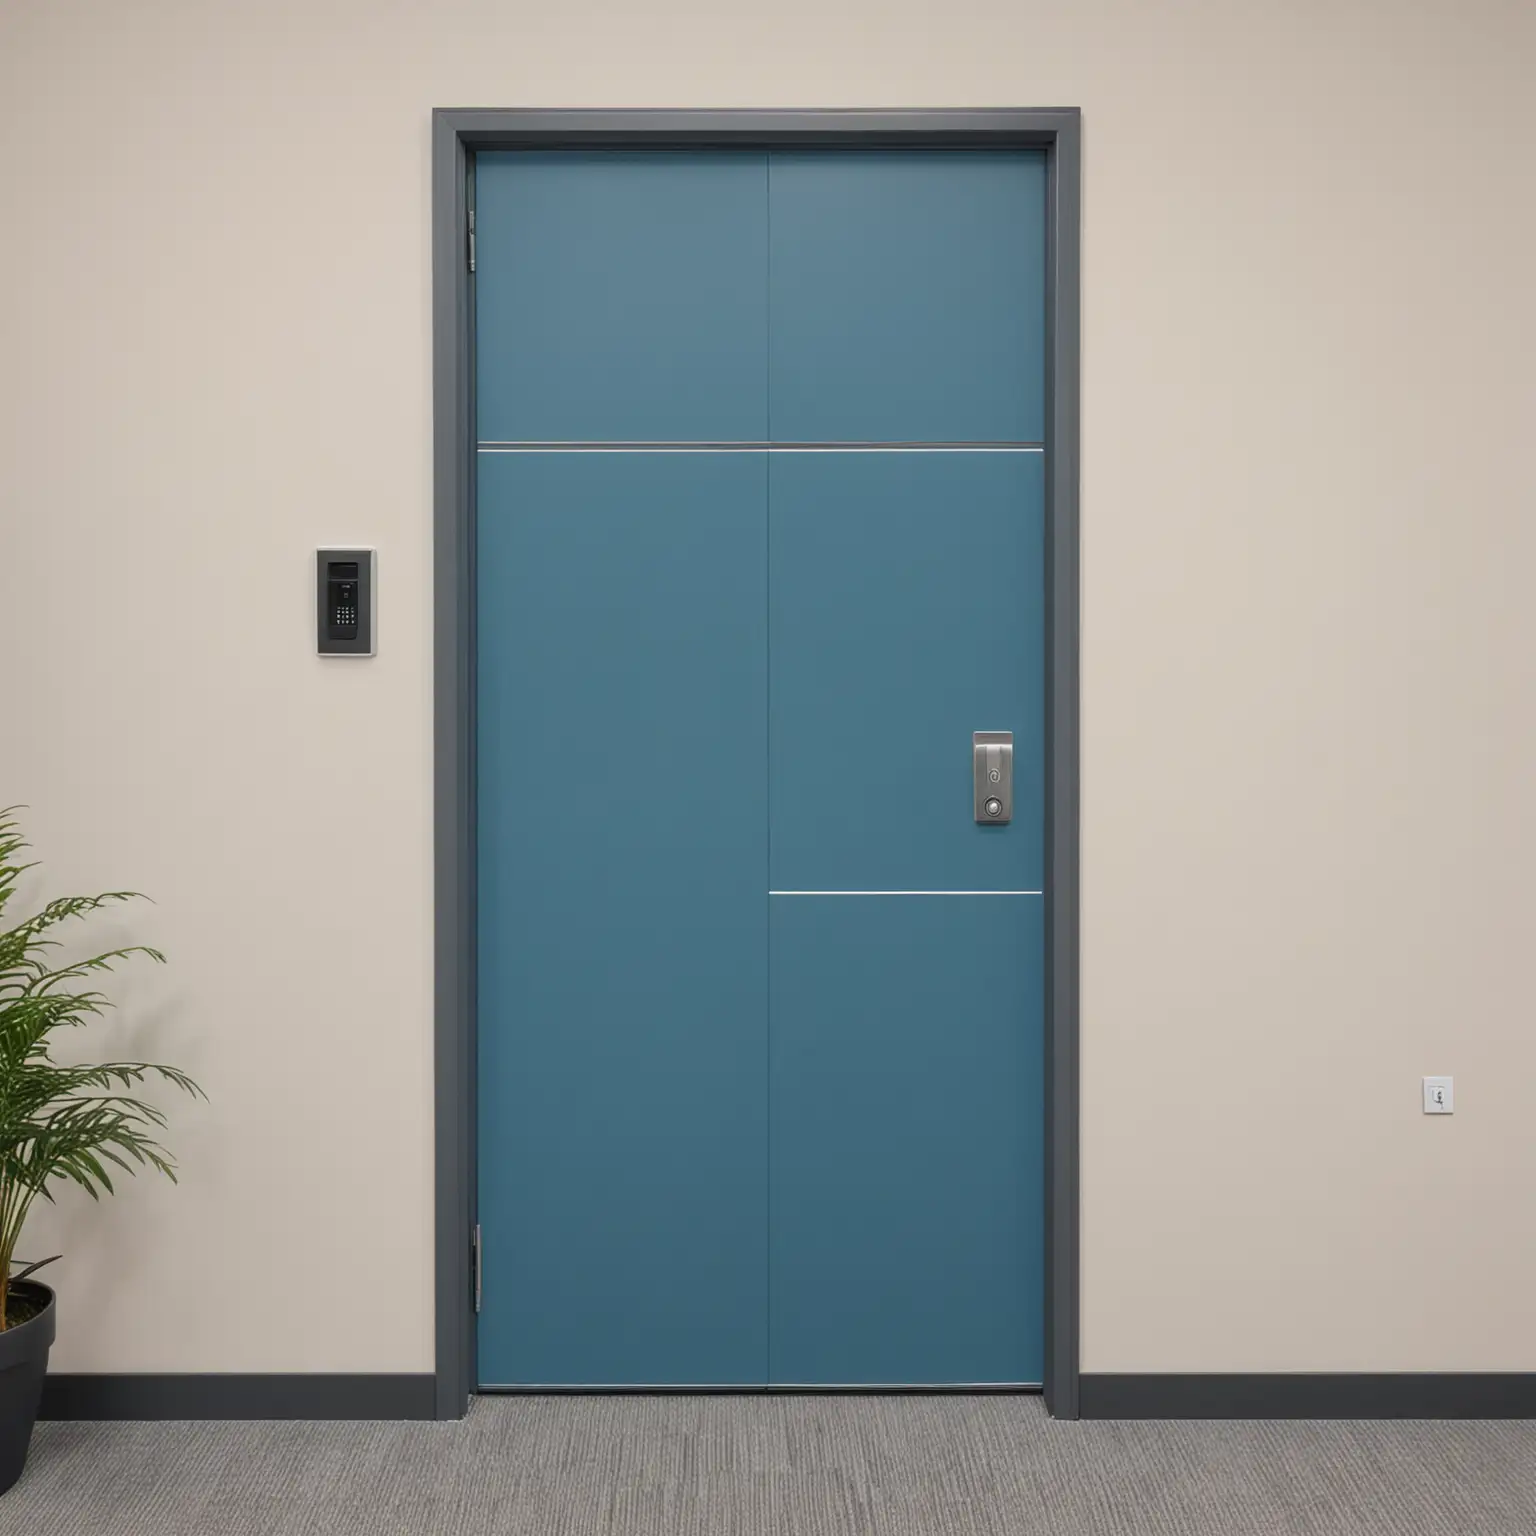 Modern Office Security Keyless Doors in Blue Setting